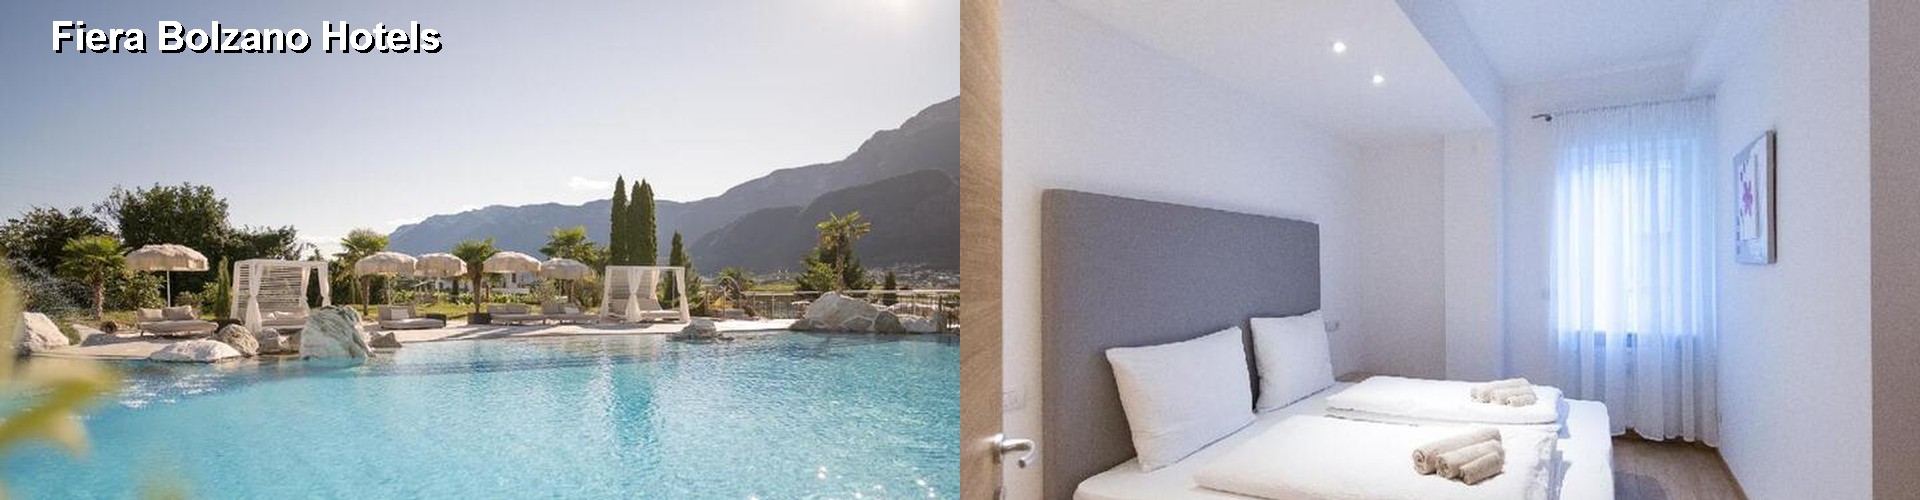 5 Best Hotels near Fiera Bolzano